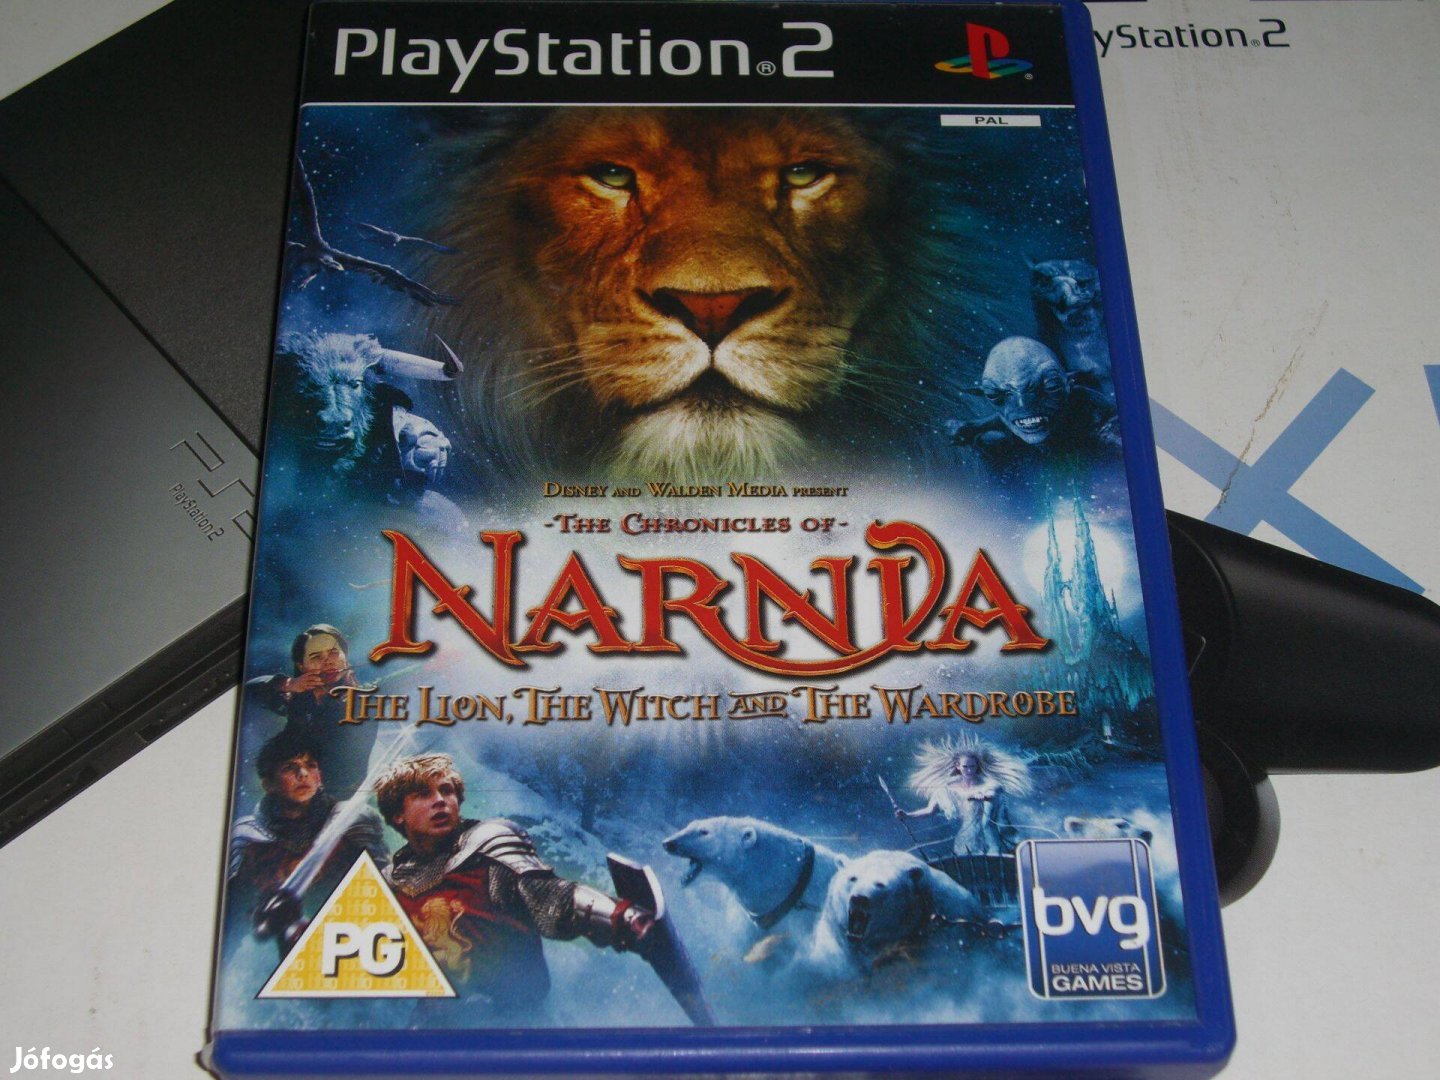 Narnia Playstation 2 eredeti lemez eladó